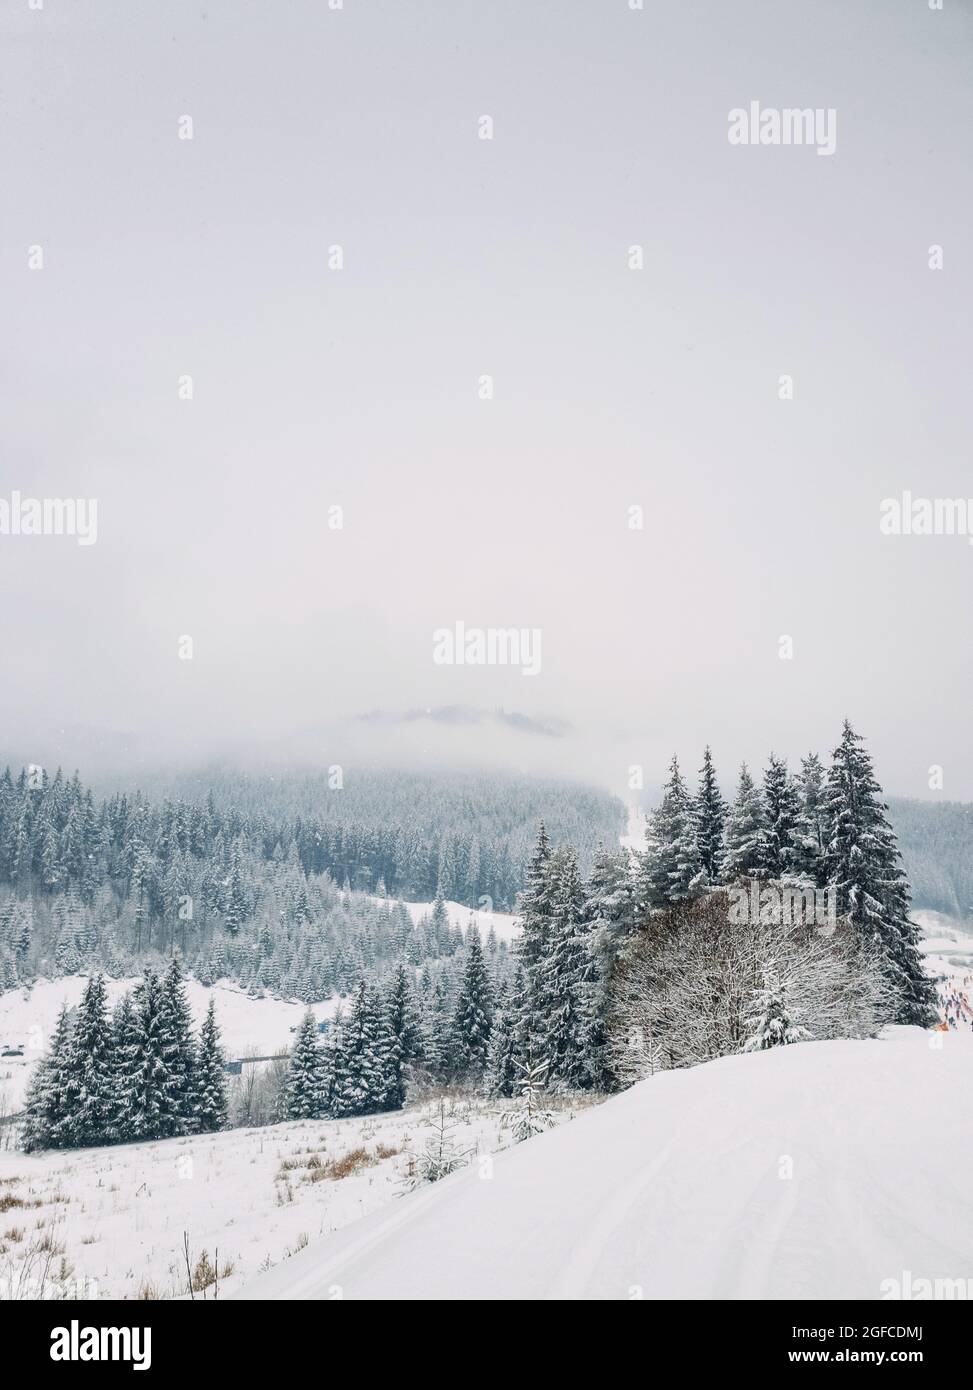 Beautiful winter snowing scene at Bukovel ski resort in Ukrainian Carpathians. Snowflakes falling from the sky. Snowy fir forest on the foggy peak Stock Photo